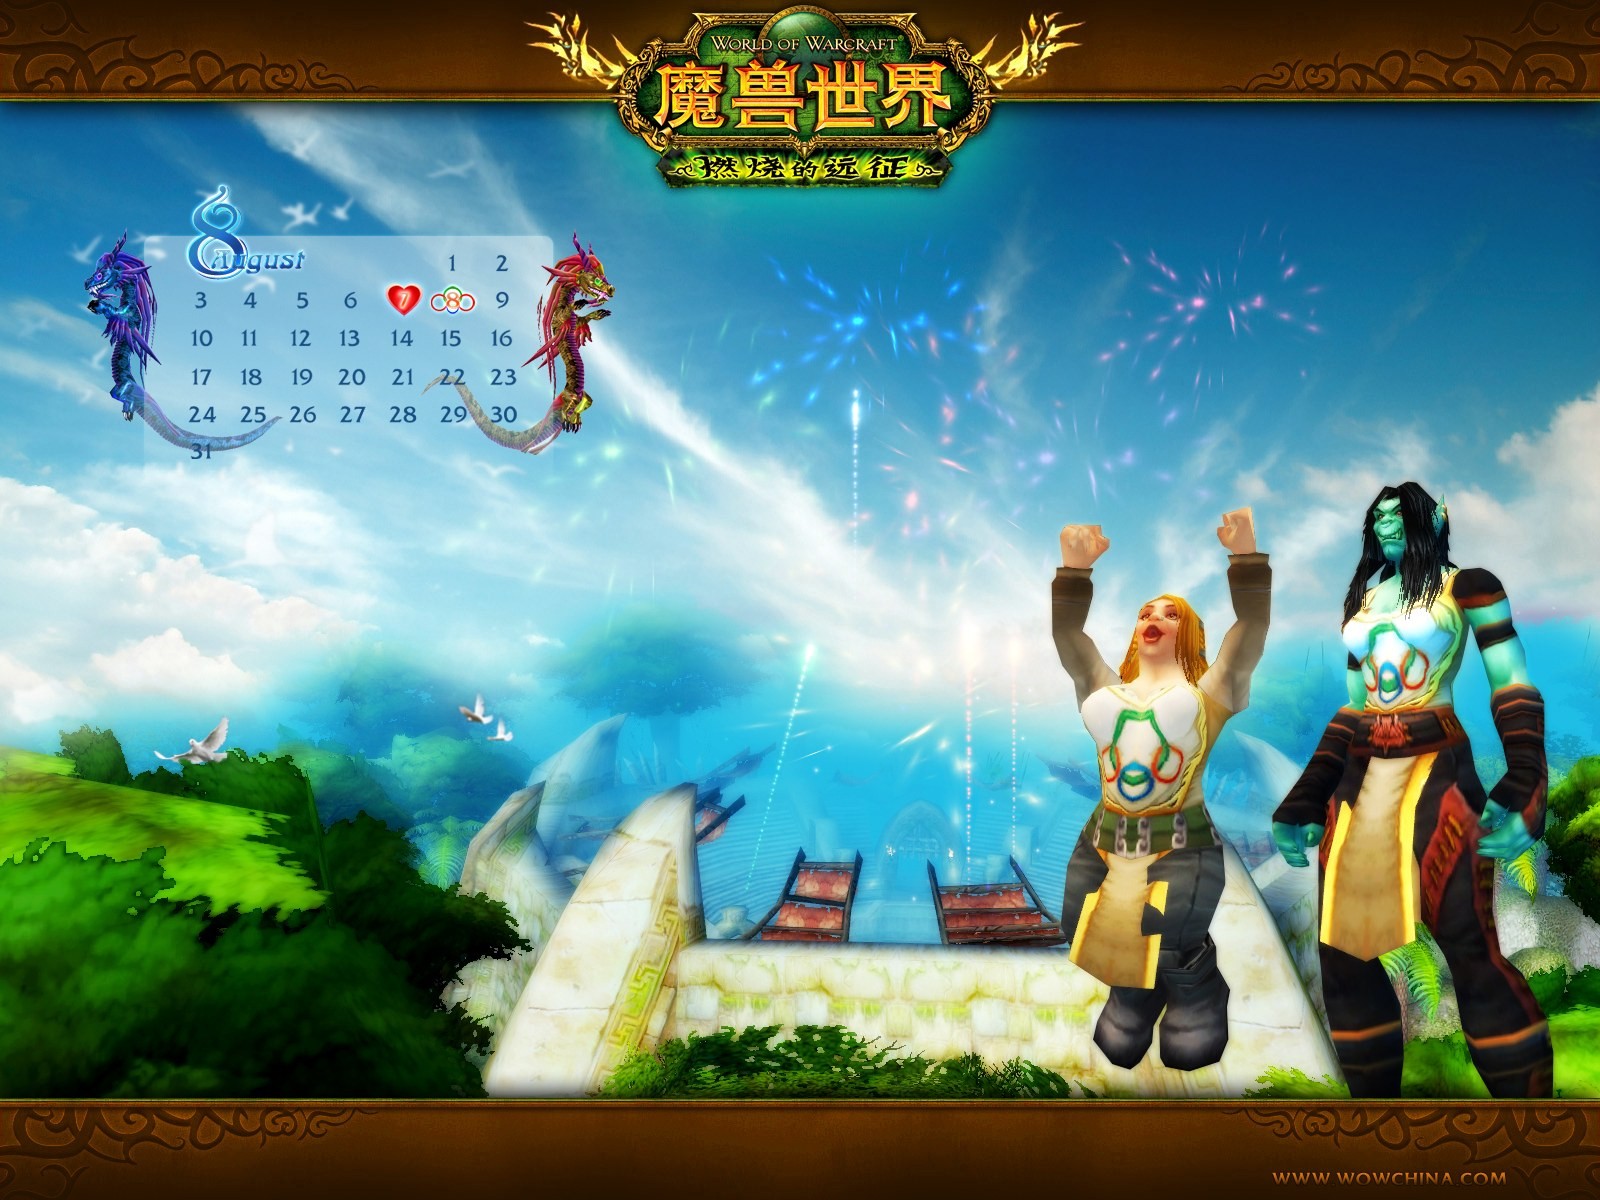 World of Warcraft: fondo de pantalla oficial de The Burning Crusade (2) #29 - 1600x1200